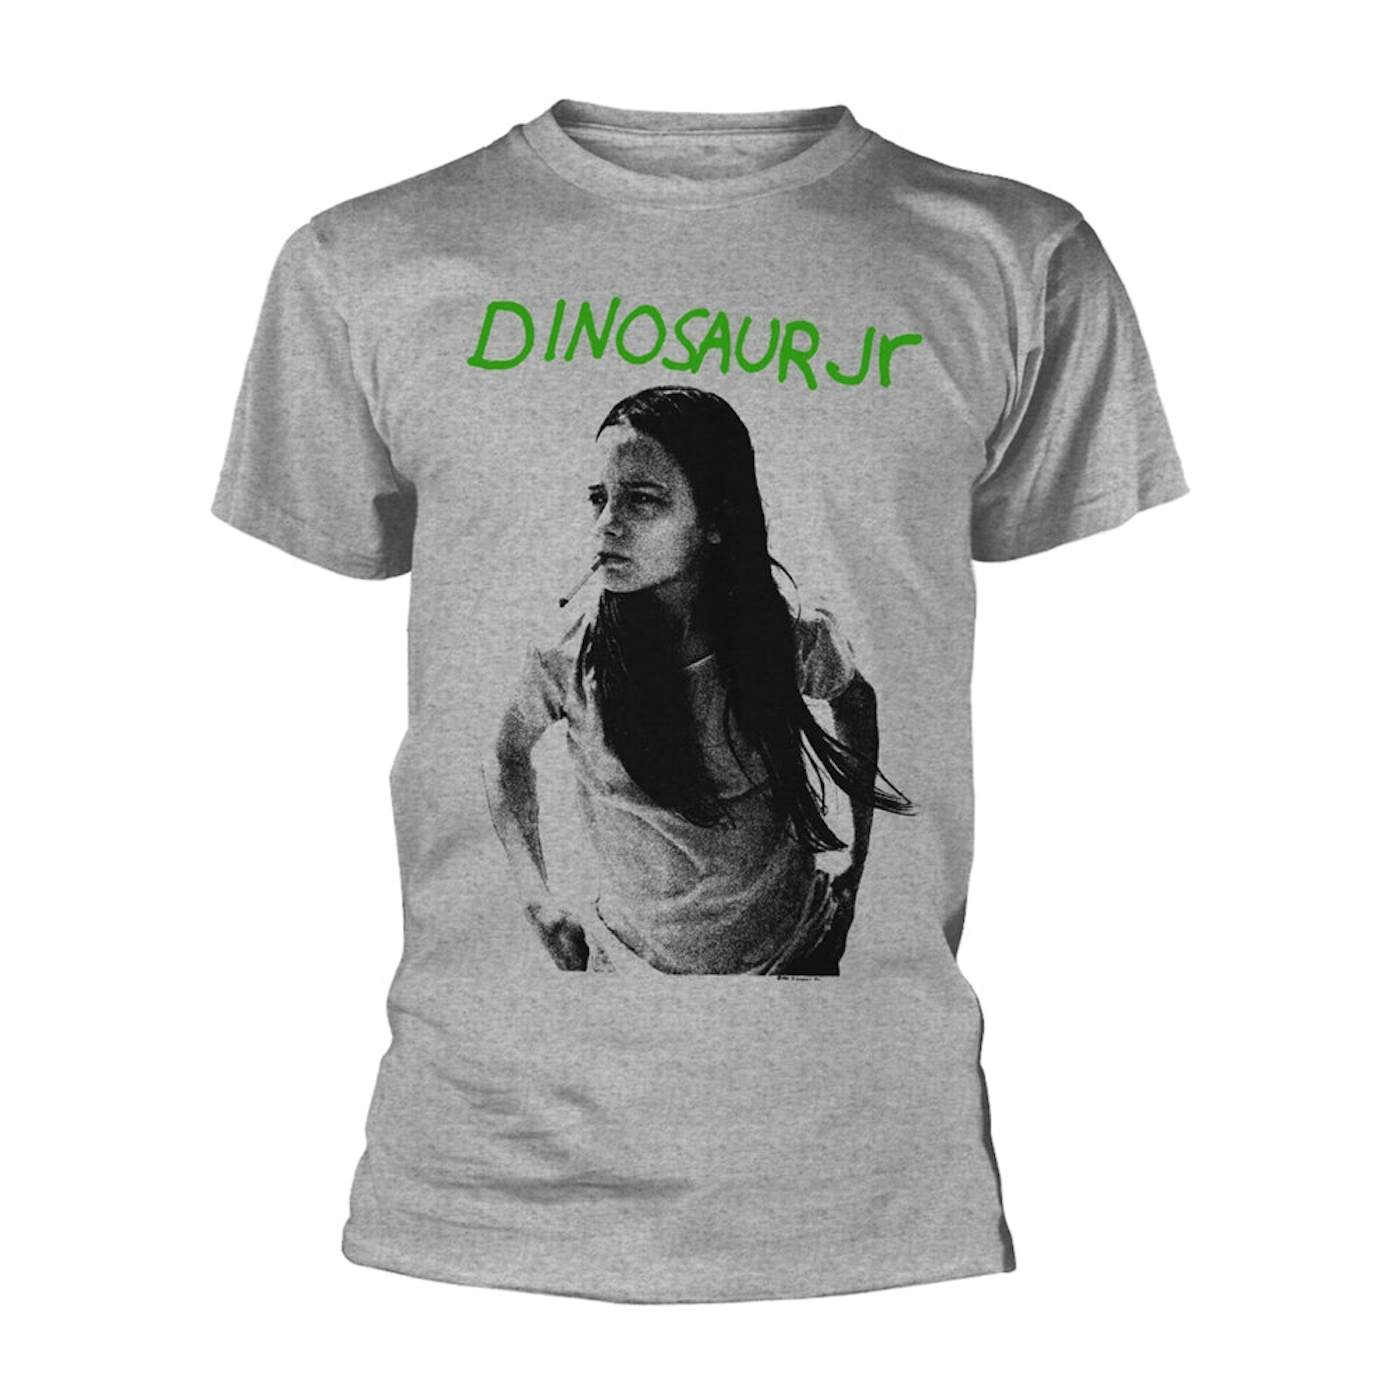 Dinosaur Jr. T Shirt - Green Mind (Grey)